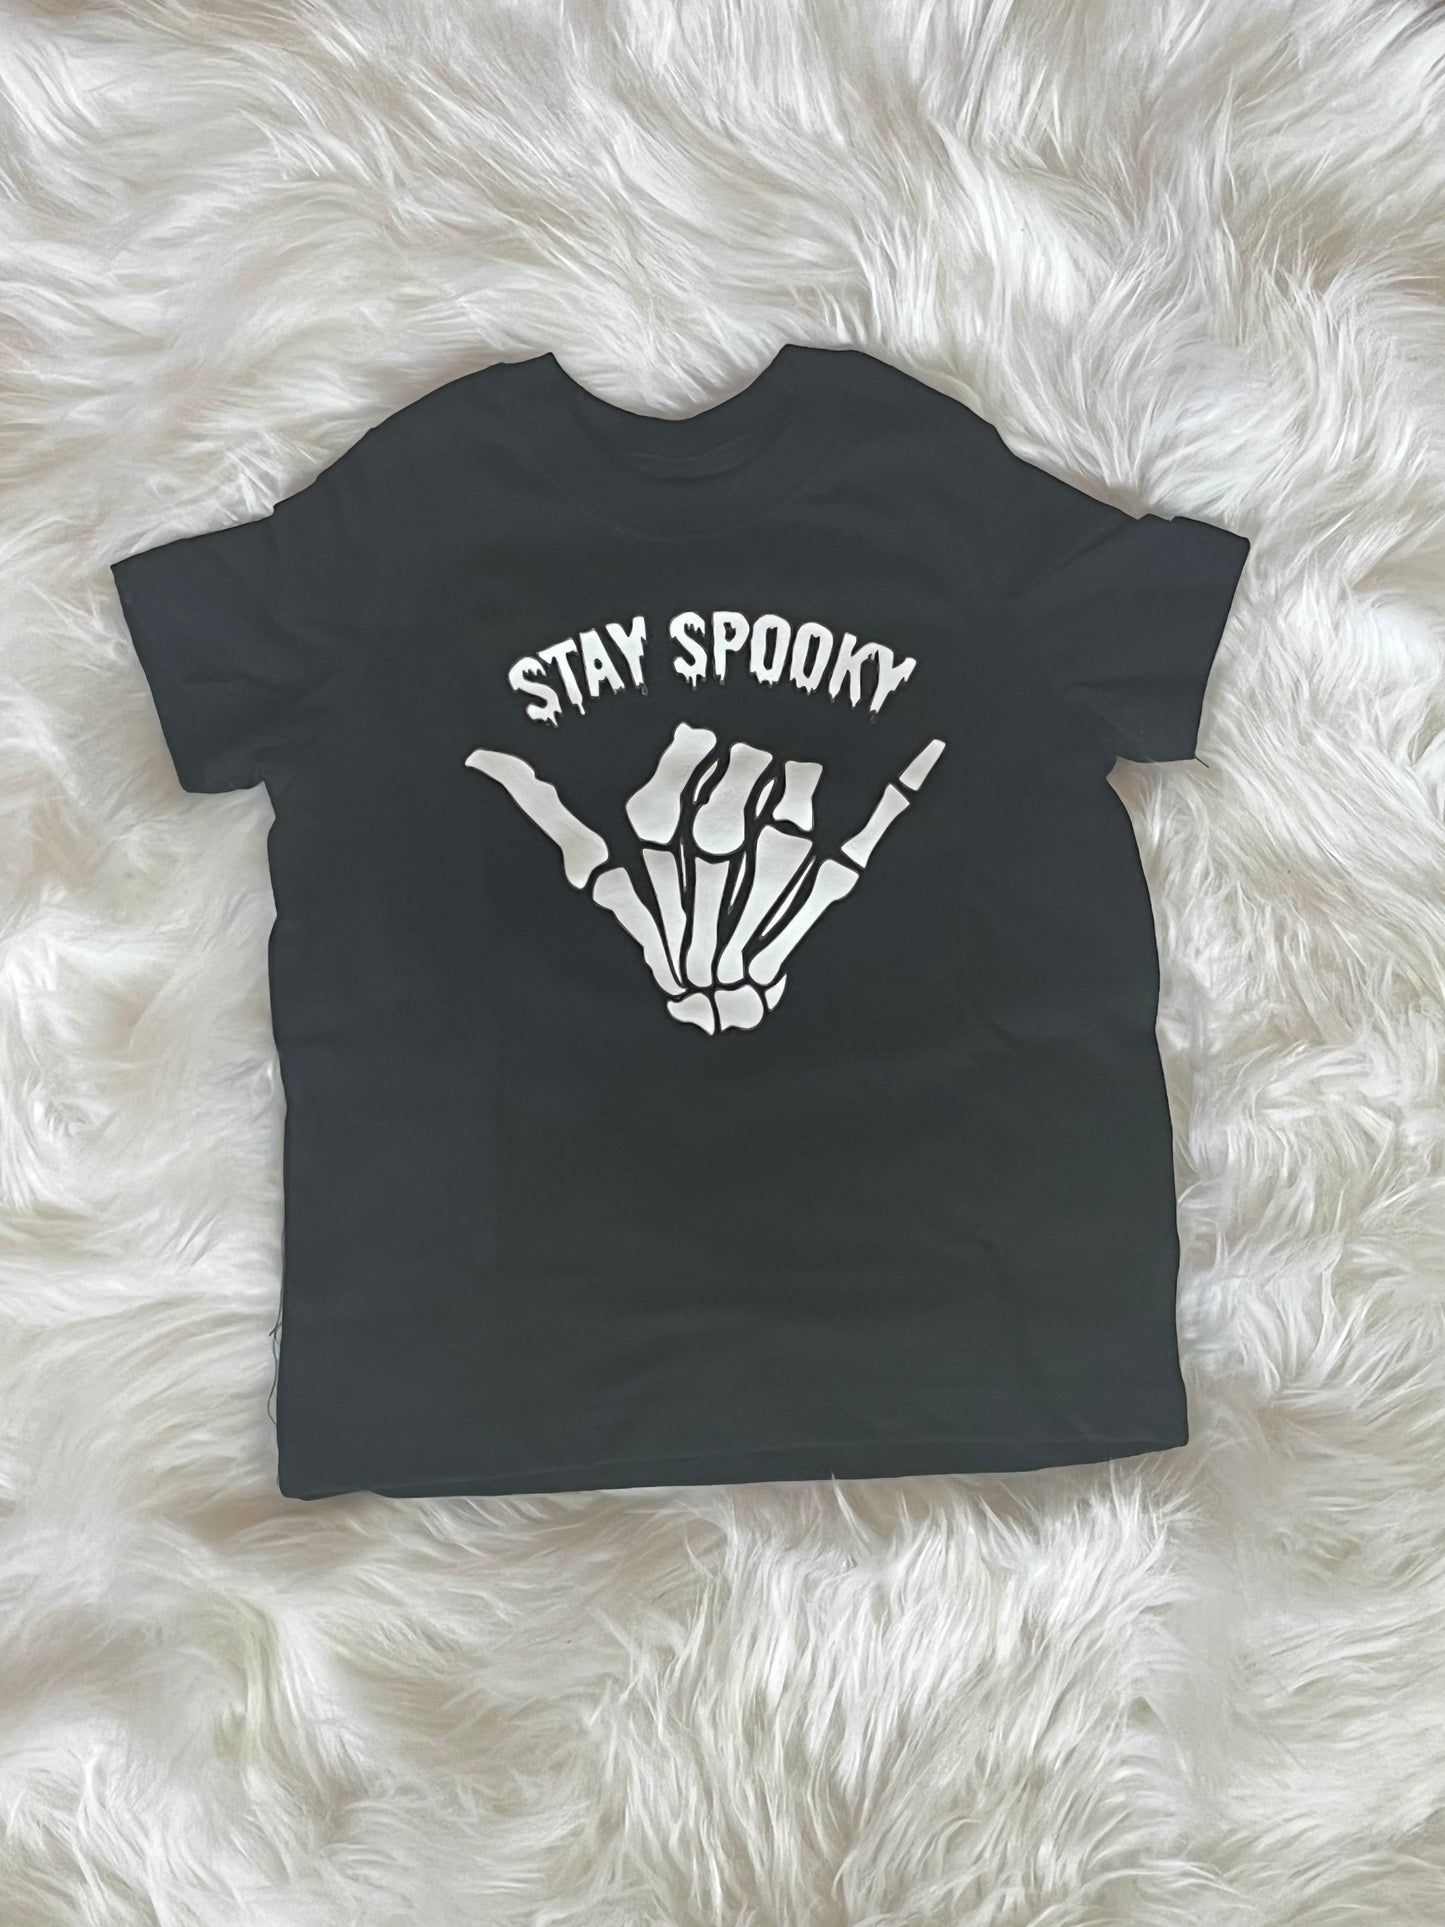 Stay Spooky Shirt